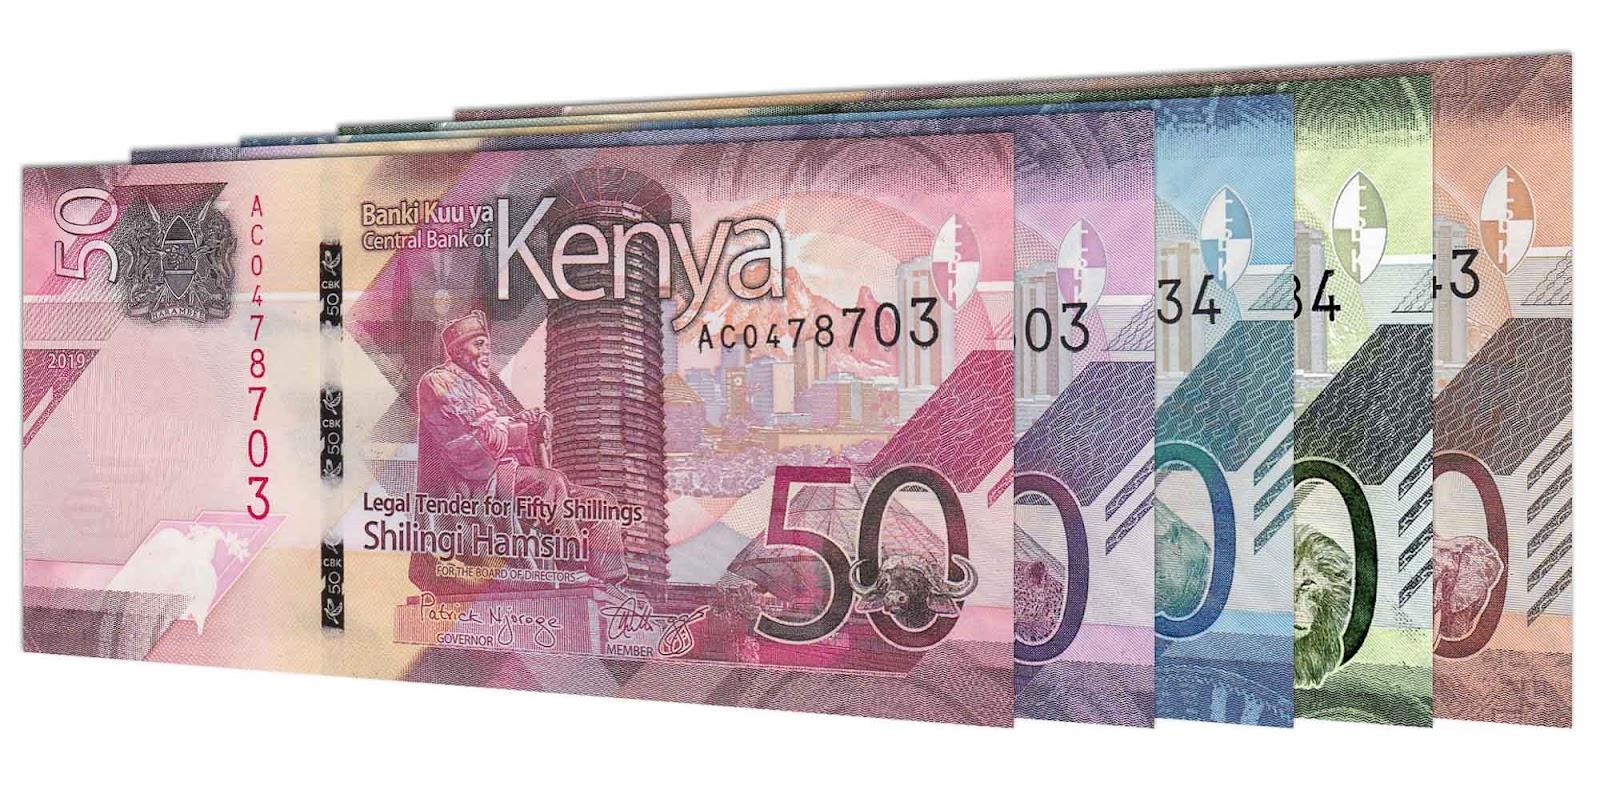 Current Kenya banknote series